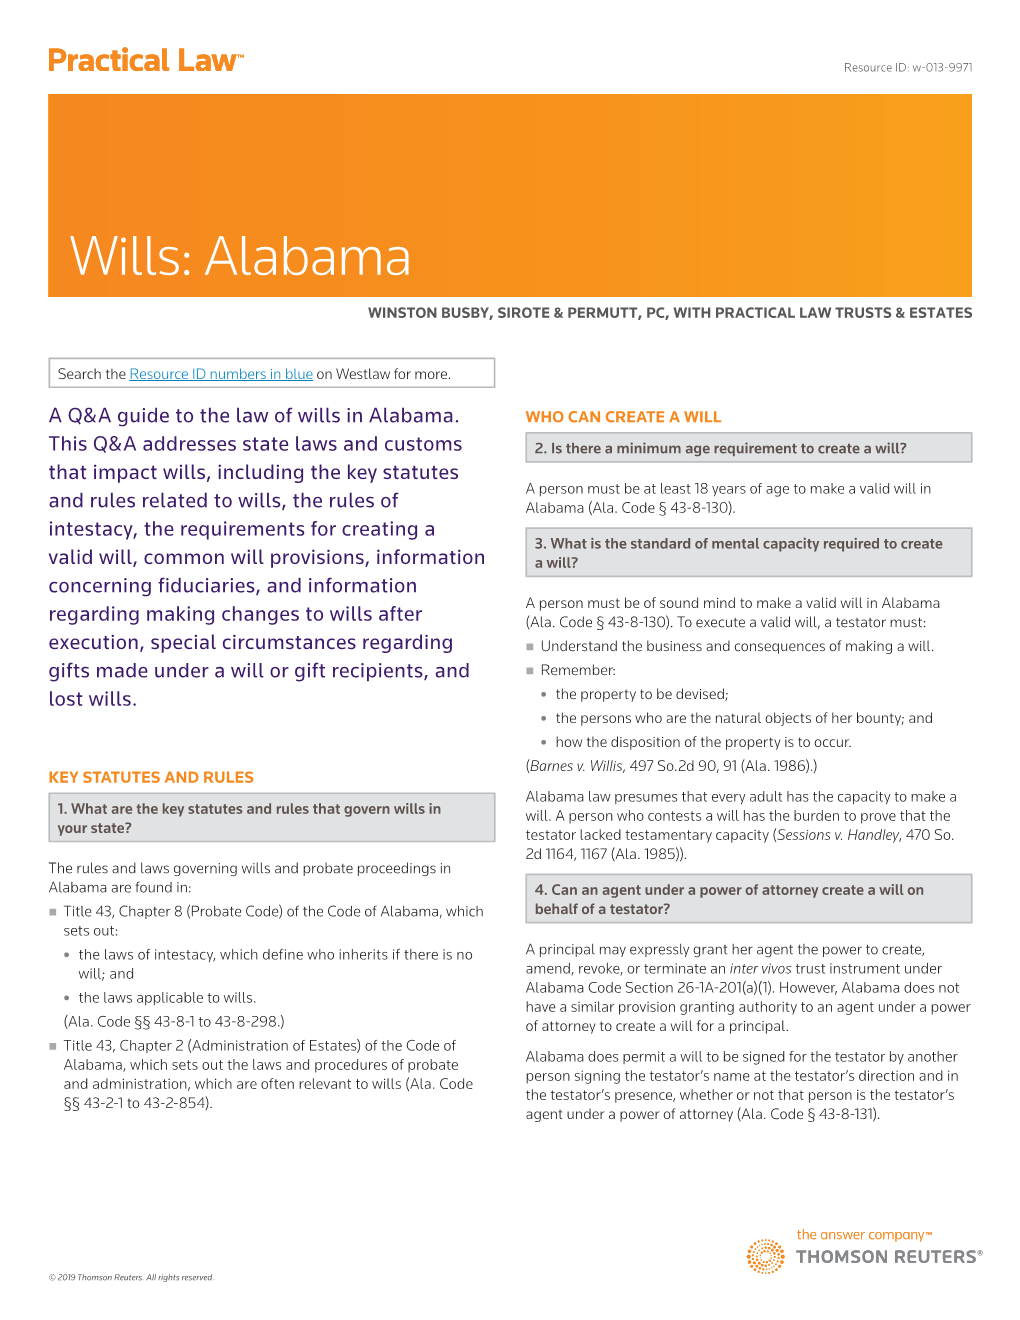 Wills: Alabama